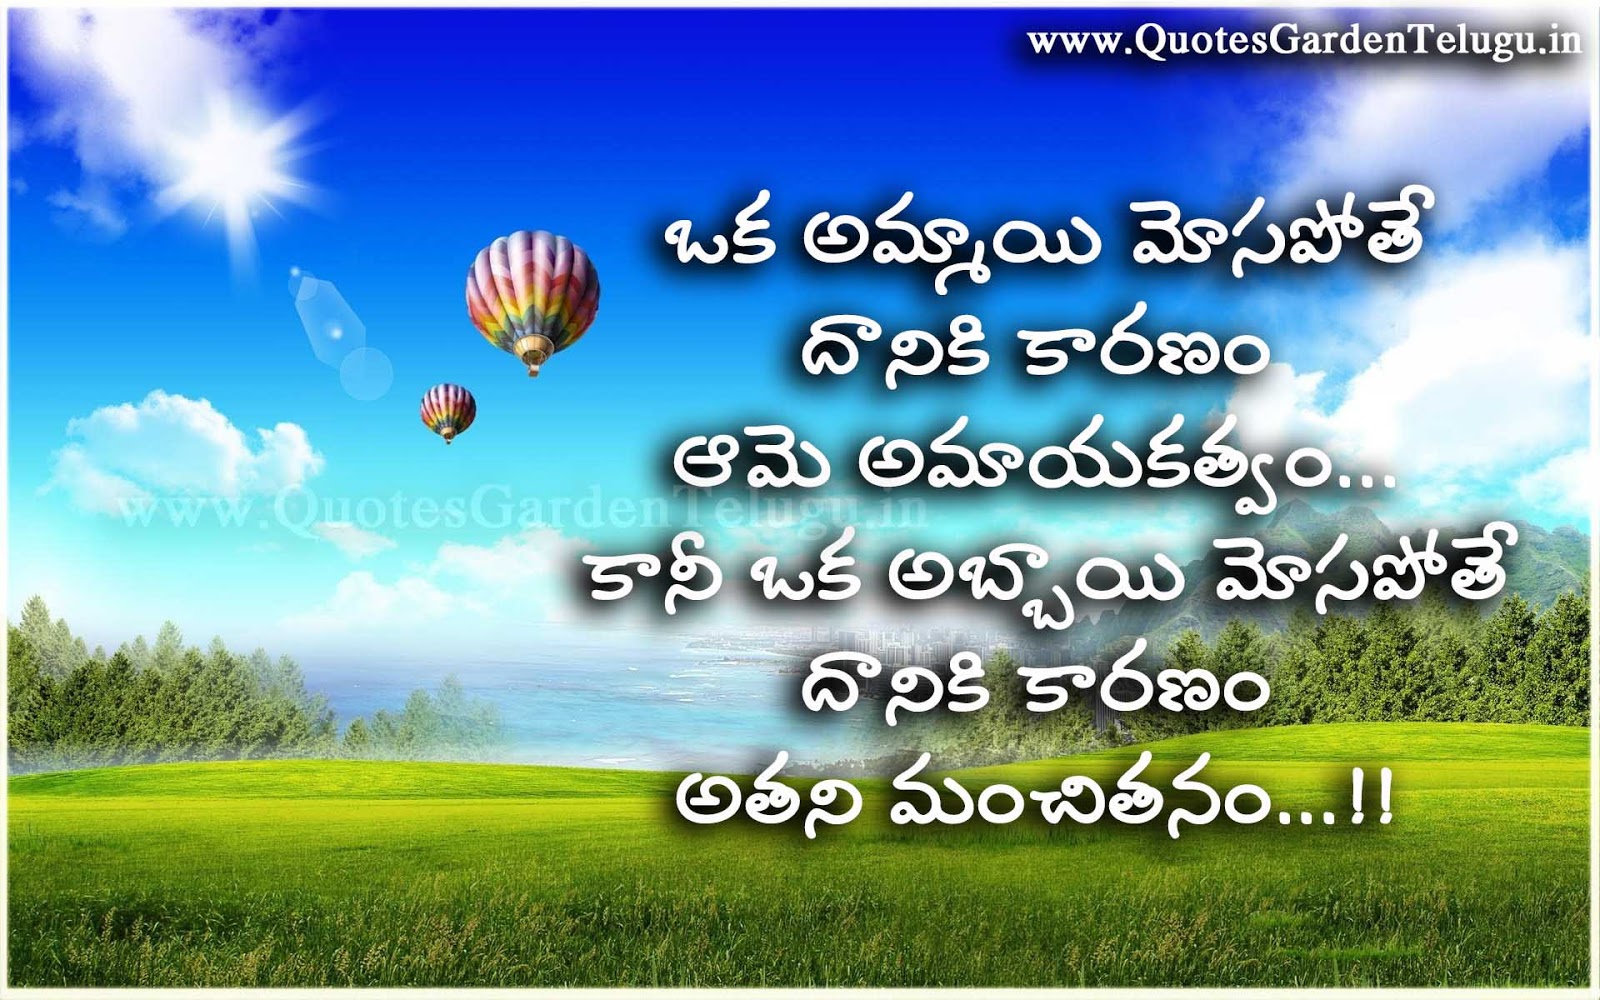 Telugu Love failure quotes for boys and girls | QUOTES GARDEN TELUGU ...